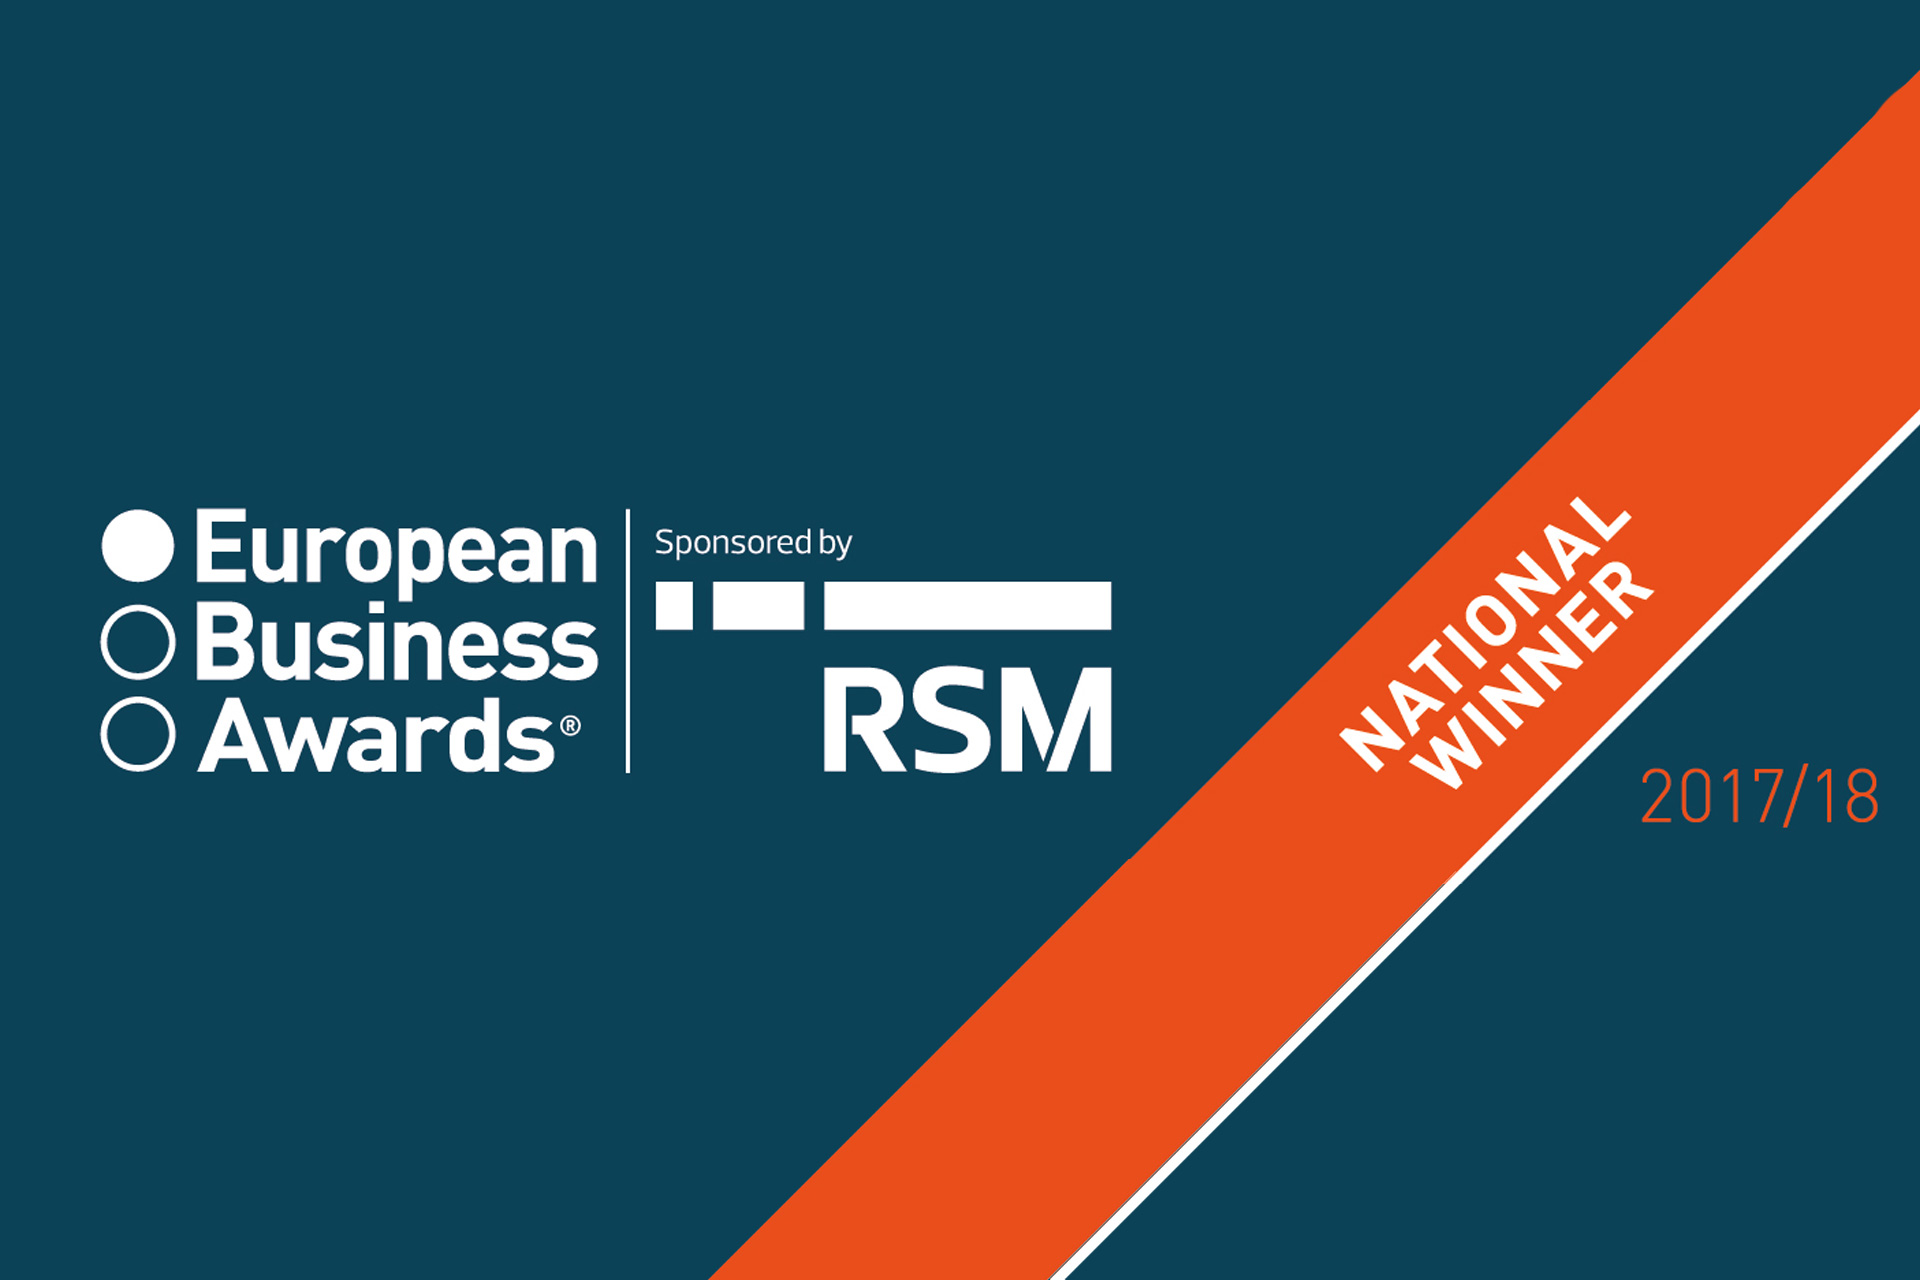 Remedica - European Business Awards 2018 winner